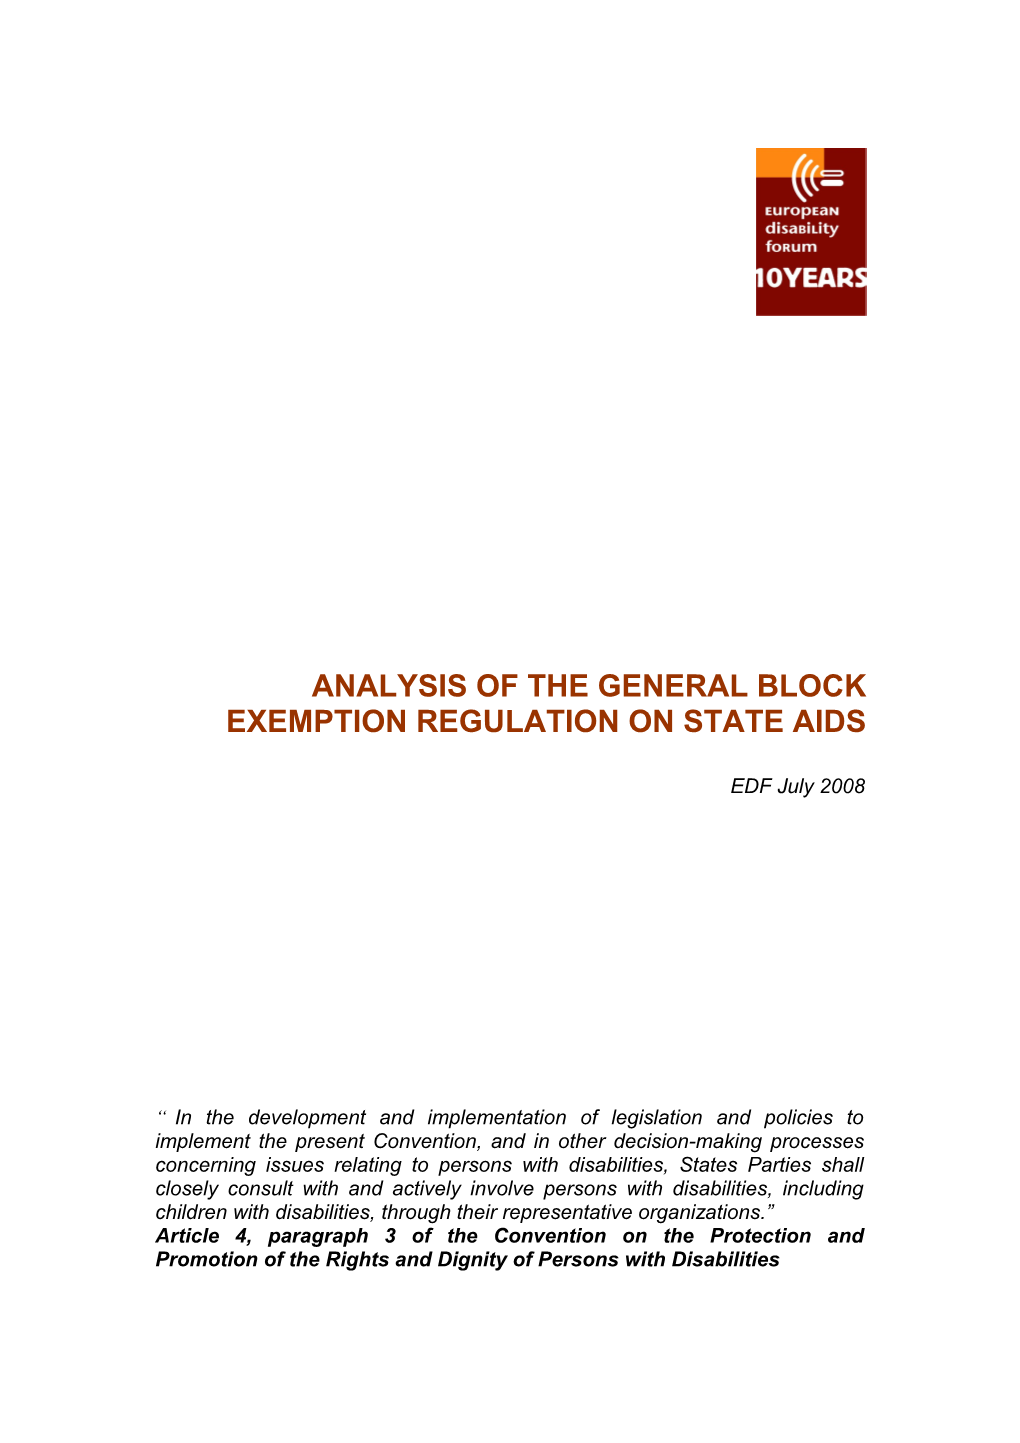 Analysis of the Block Exemption Regulation